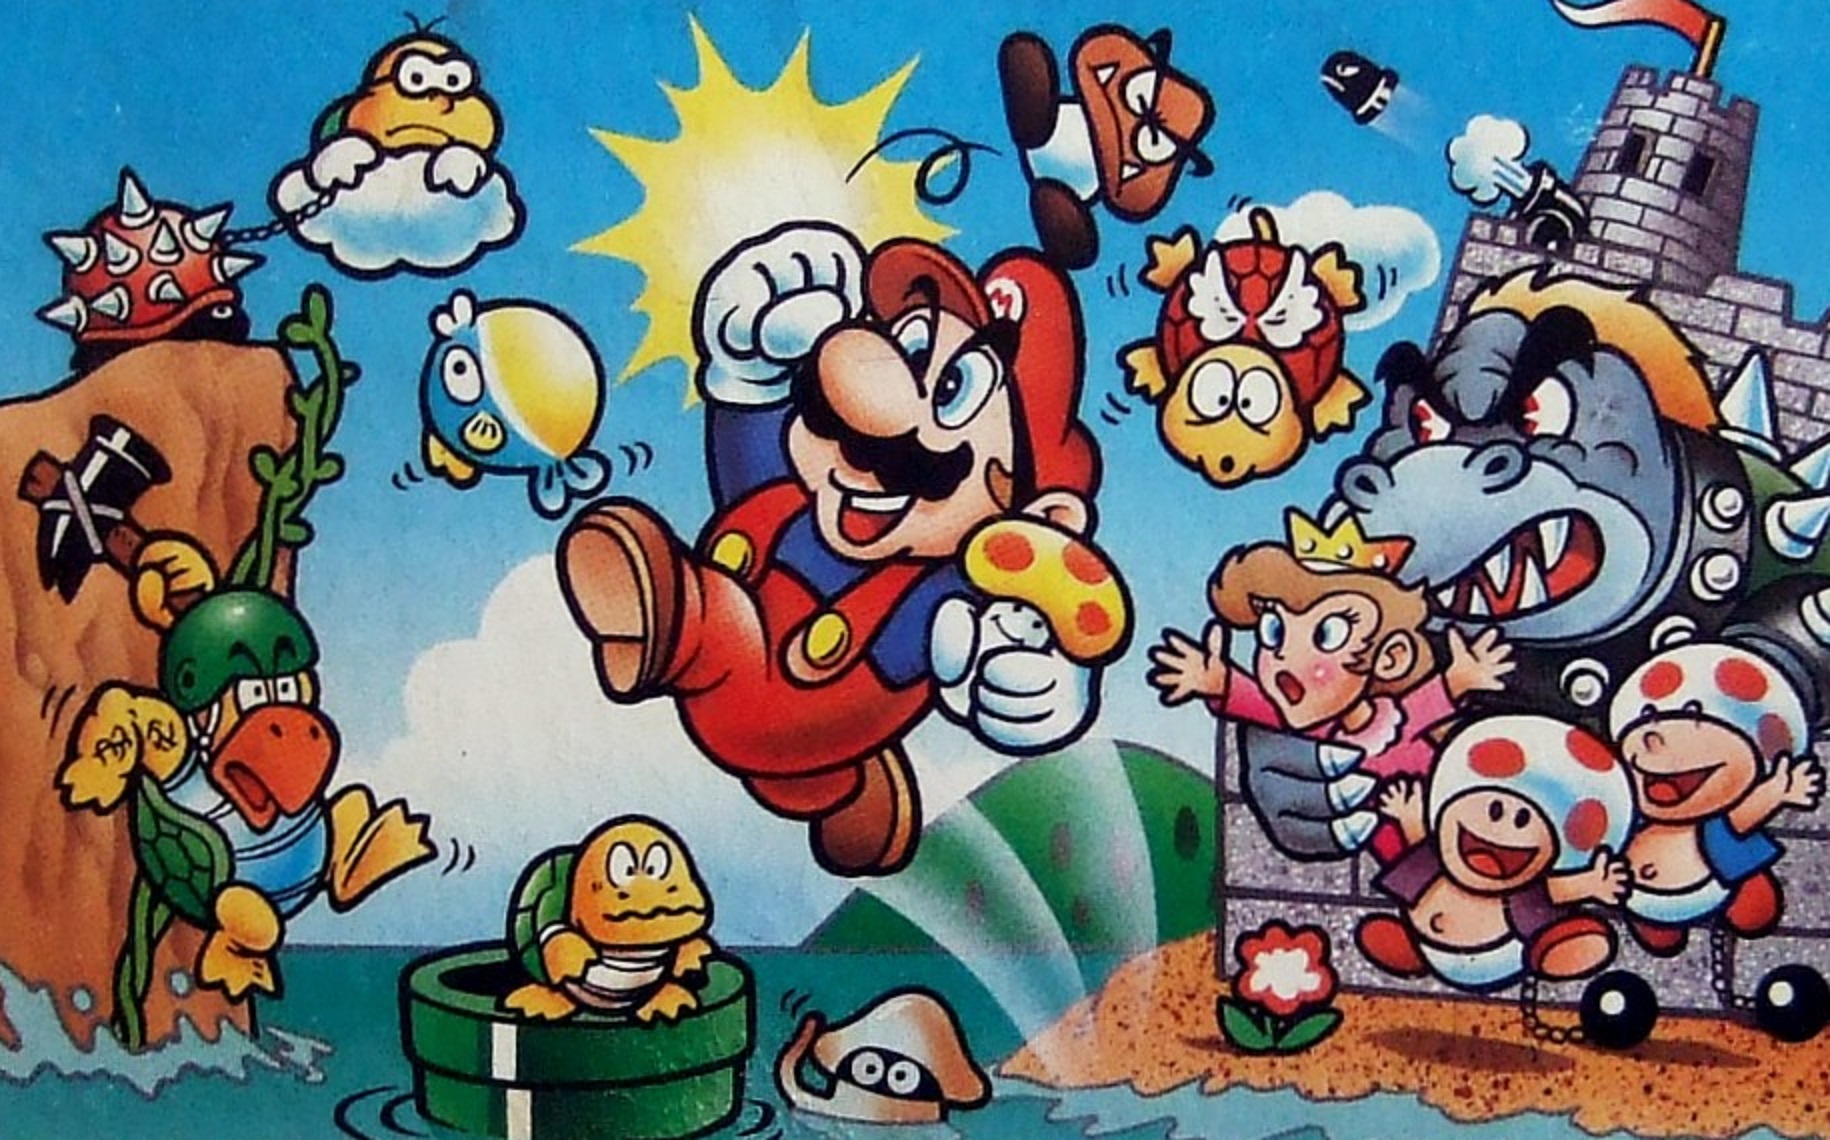 Mario bros special. Марио 1999. Super Mario Bros 3 Famicom. Super Mario Bros Famicom обложка. Марио БРОС 1985.